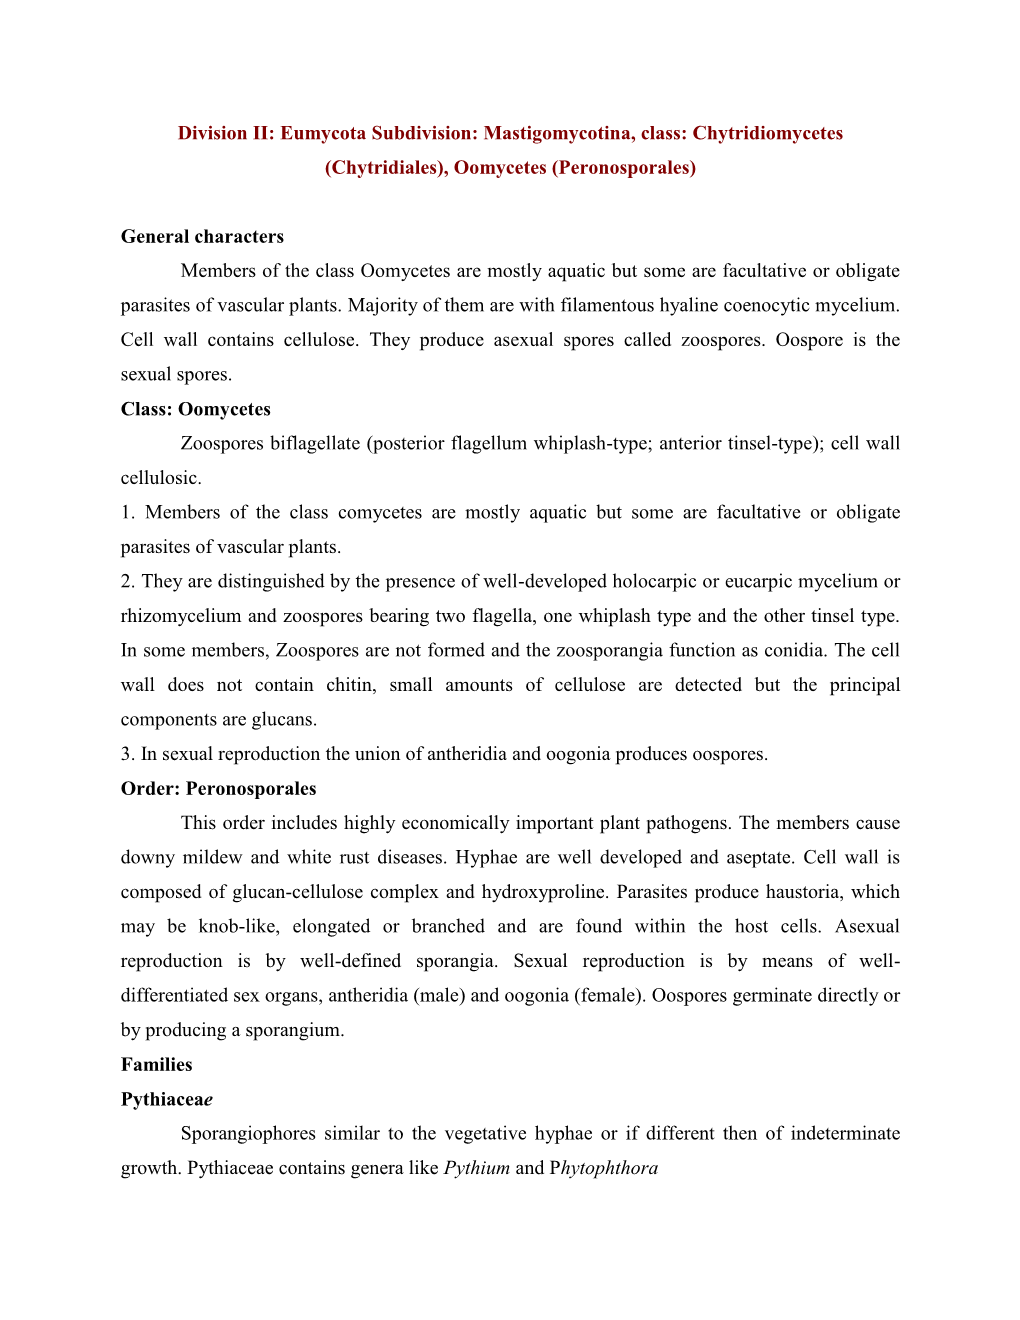 Division II: Eumycota Subdivision: Mastigomycotina, Class: Chytridiomycetes (Chytridiales), Oomycetes (Peronosporales)